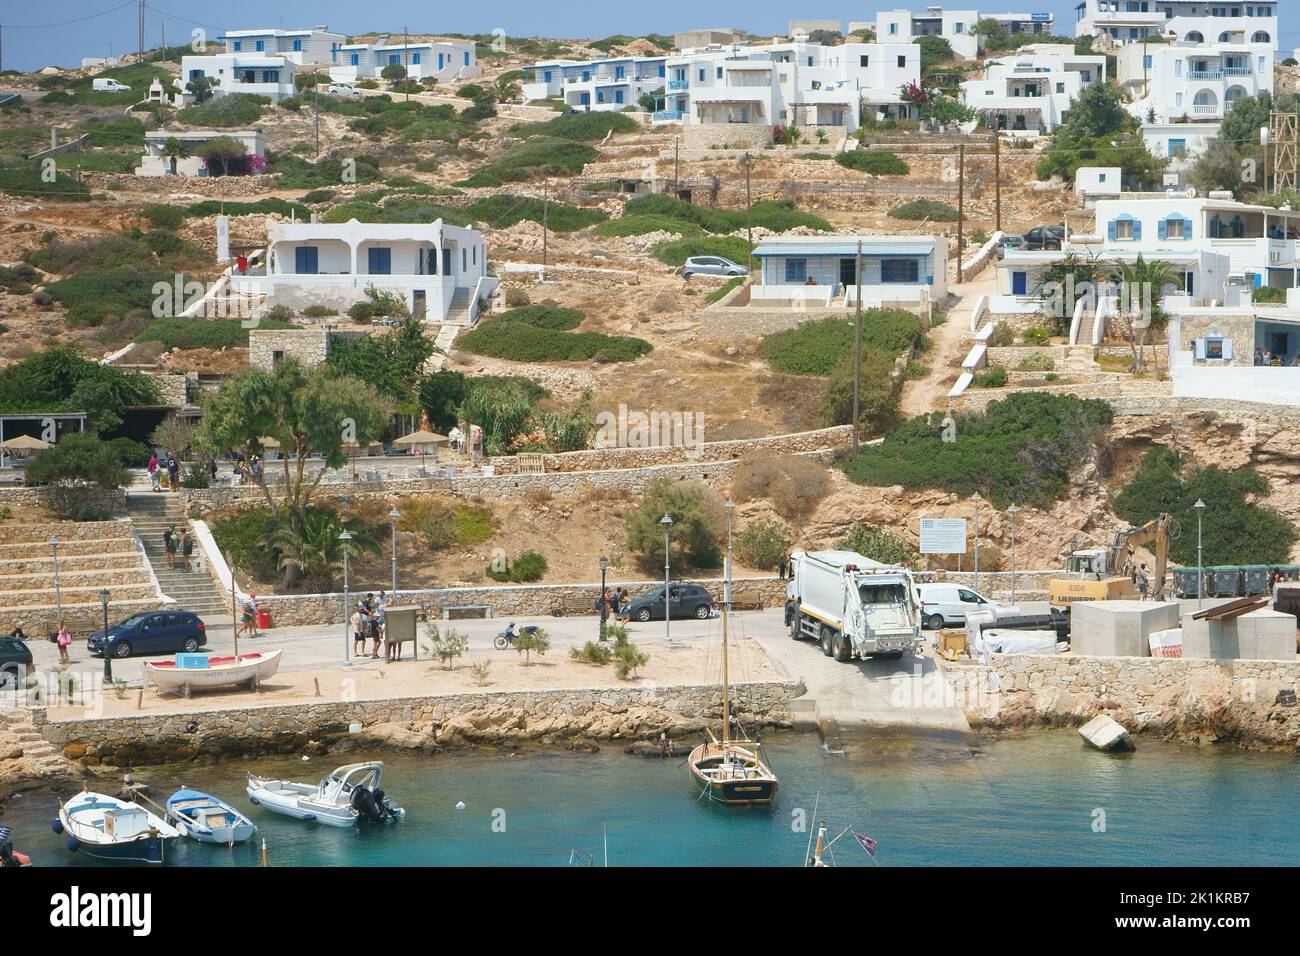 Donoussa, Small Cyclades island, aegean sea, Greece Stock Photo